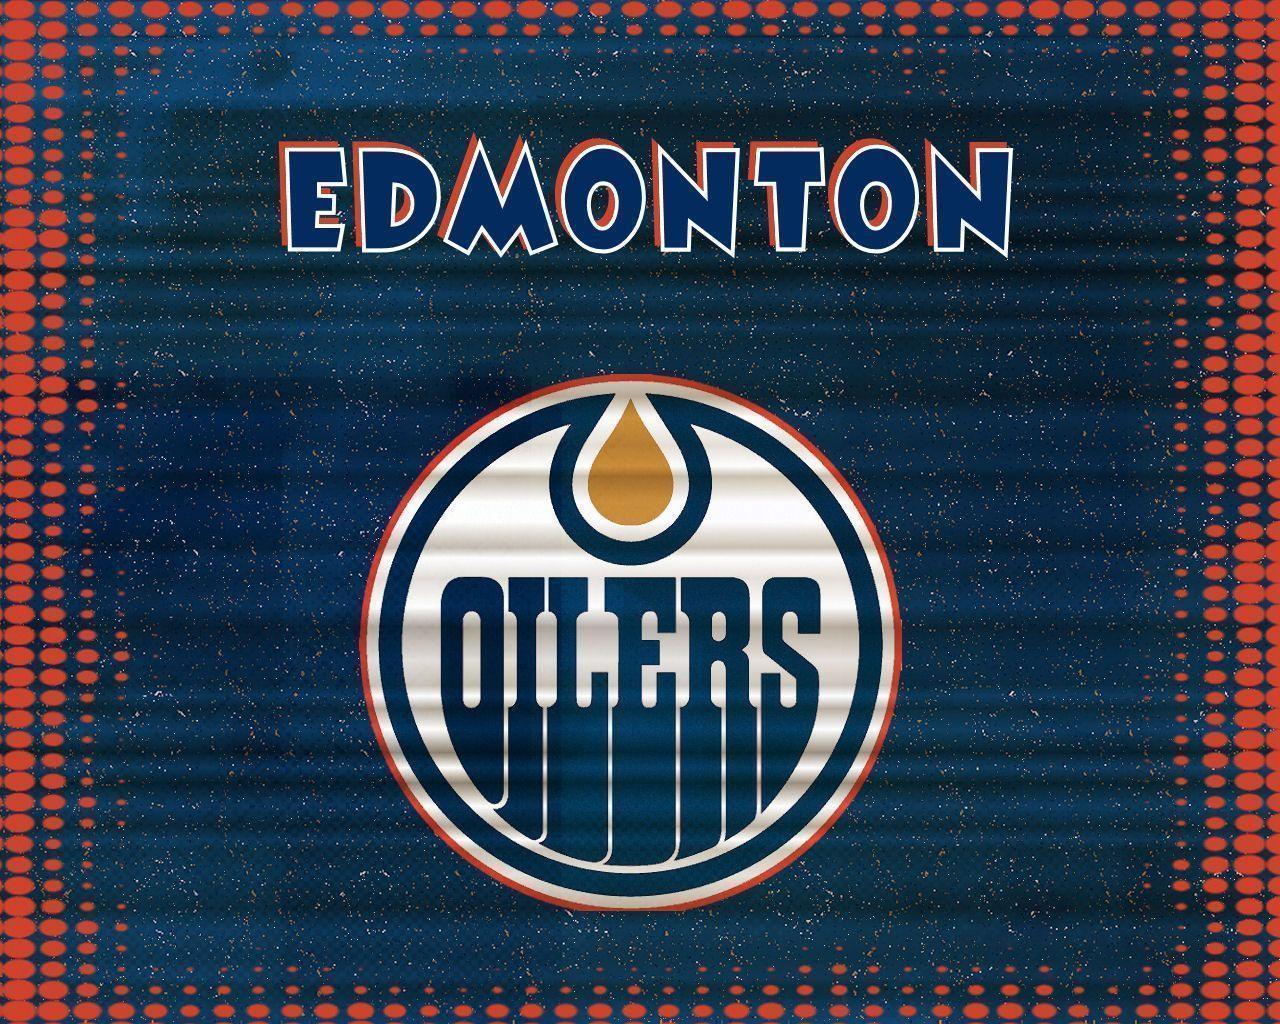 Free Edmonton Oilers desktop wallpaper. Edmonton Oilers wallpaper